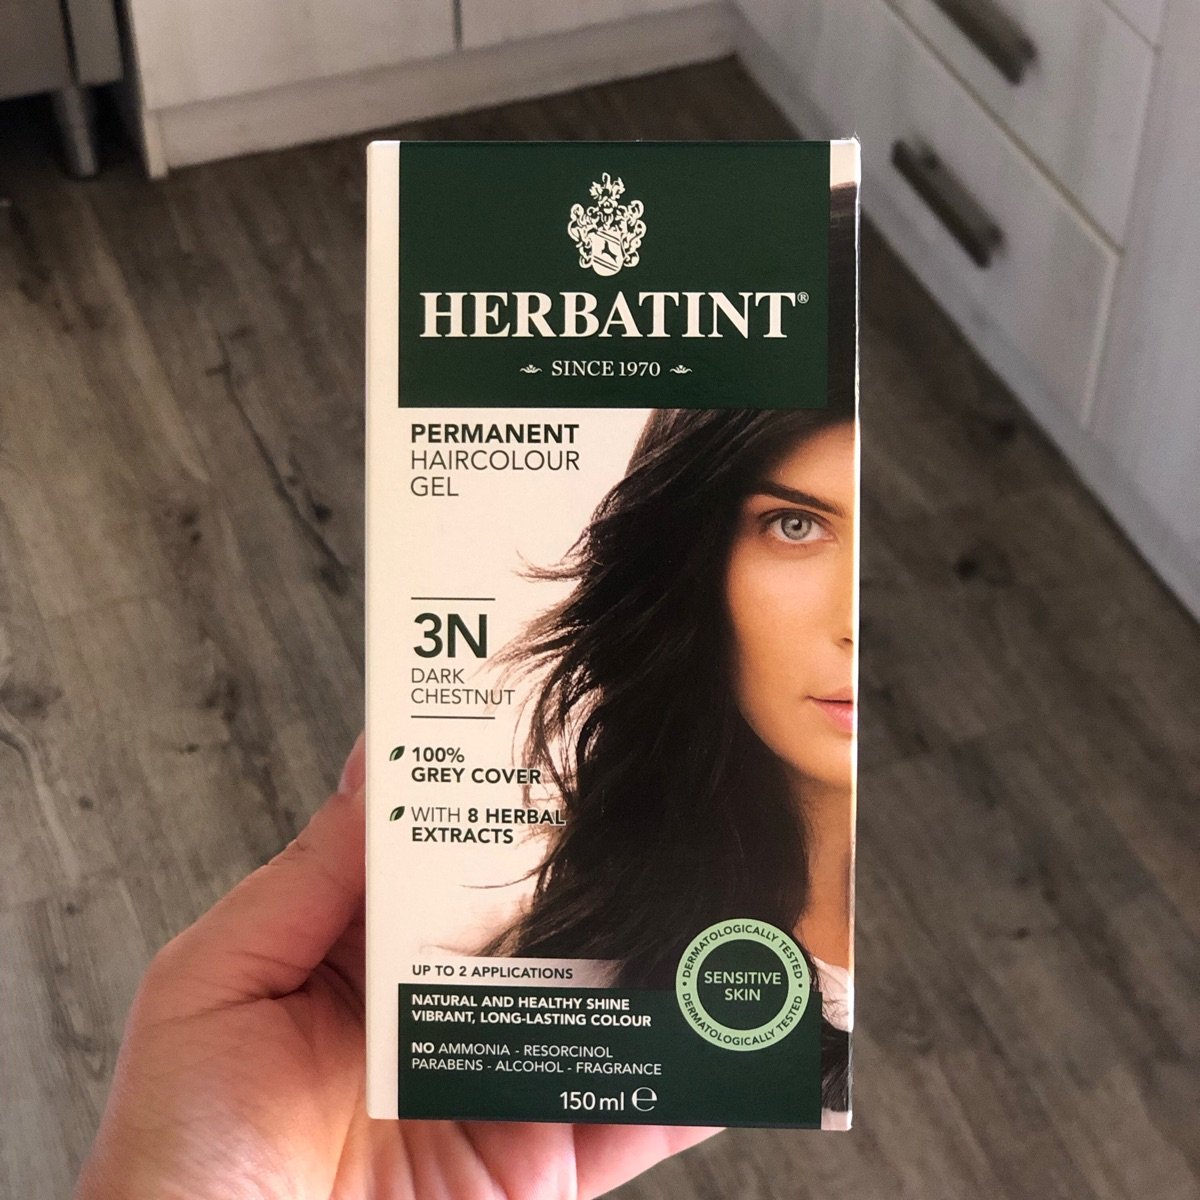 Herbatint Permanent Hair Colour Gel 3N Dark Chestnut Review | abillion